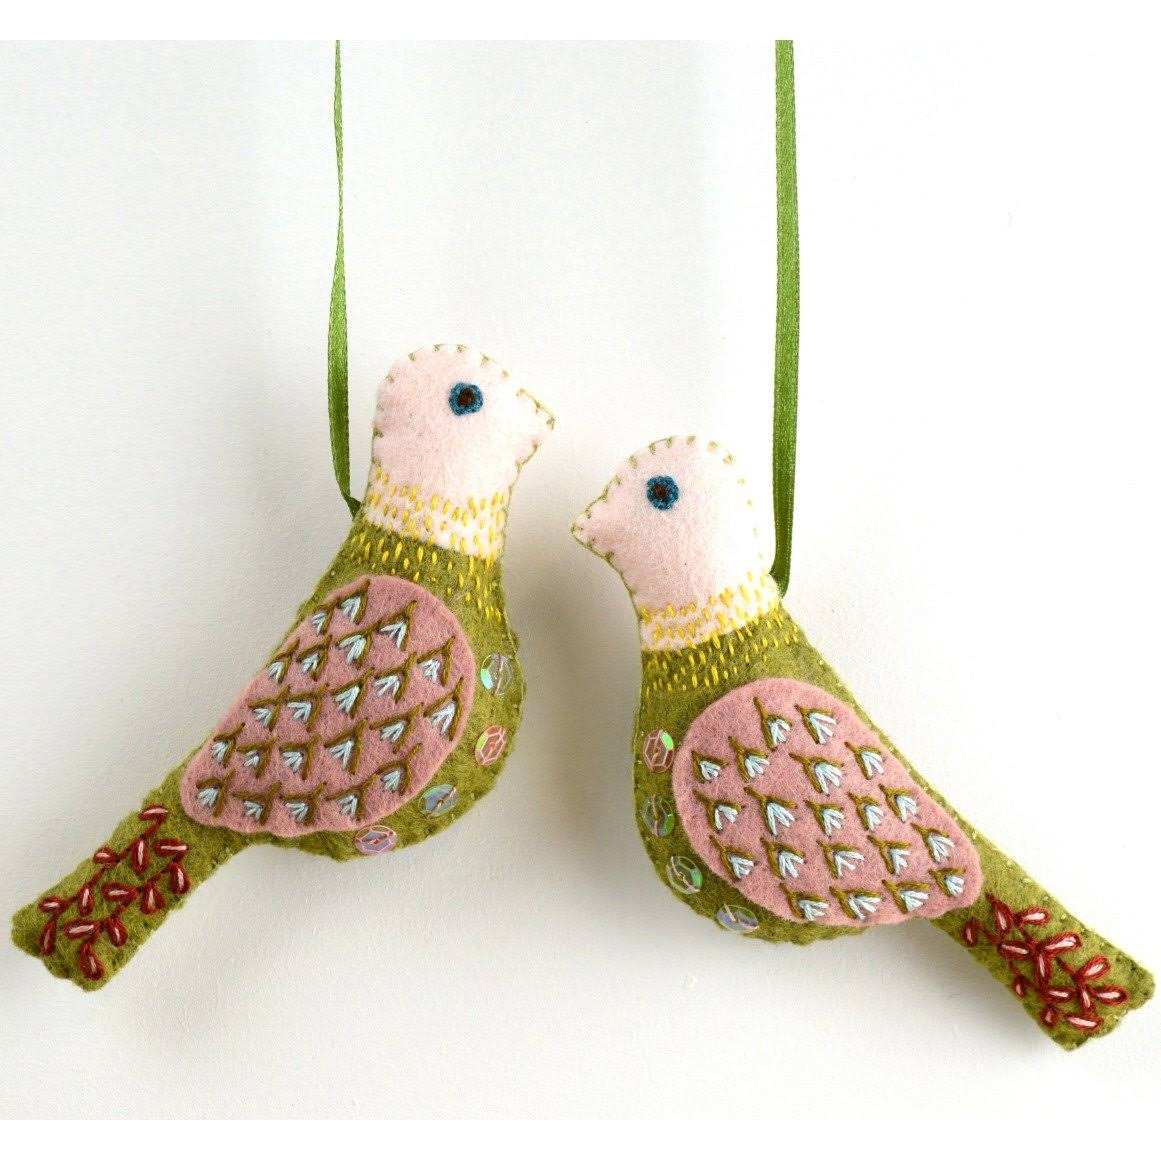 Corinne LaPierre Felt Embroidery Craft Kit - Felt Embroidered Love Birds